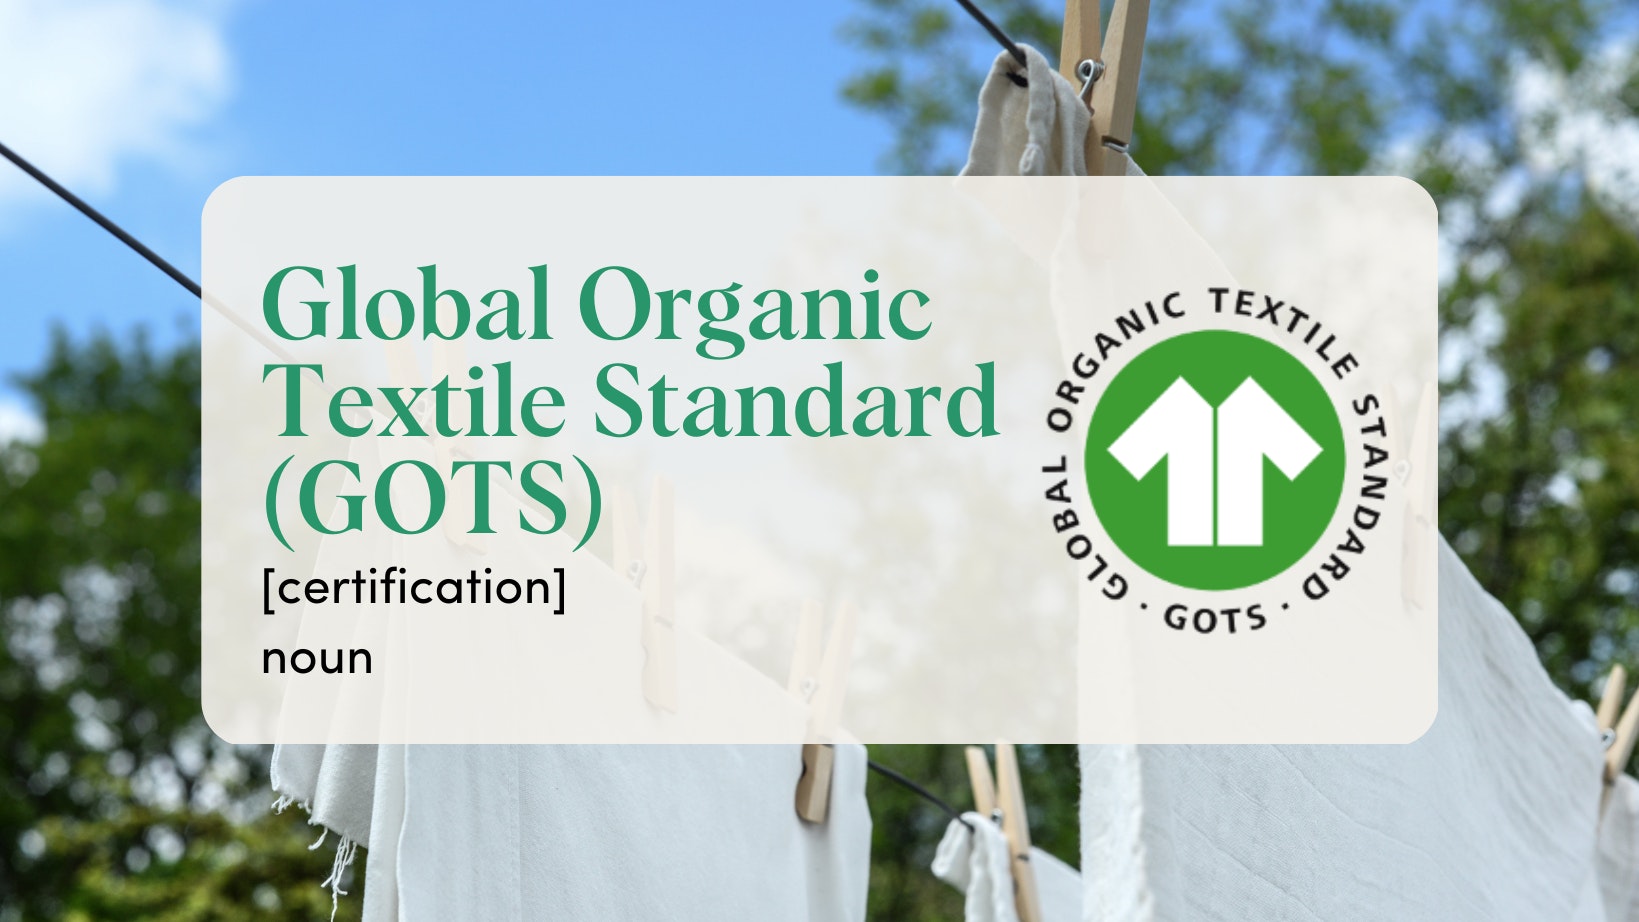 Global Organic Textile Standard Gots